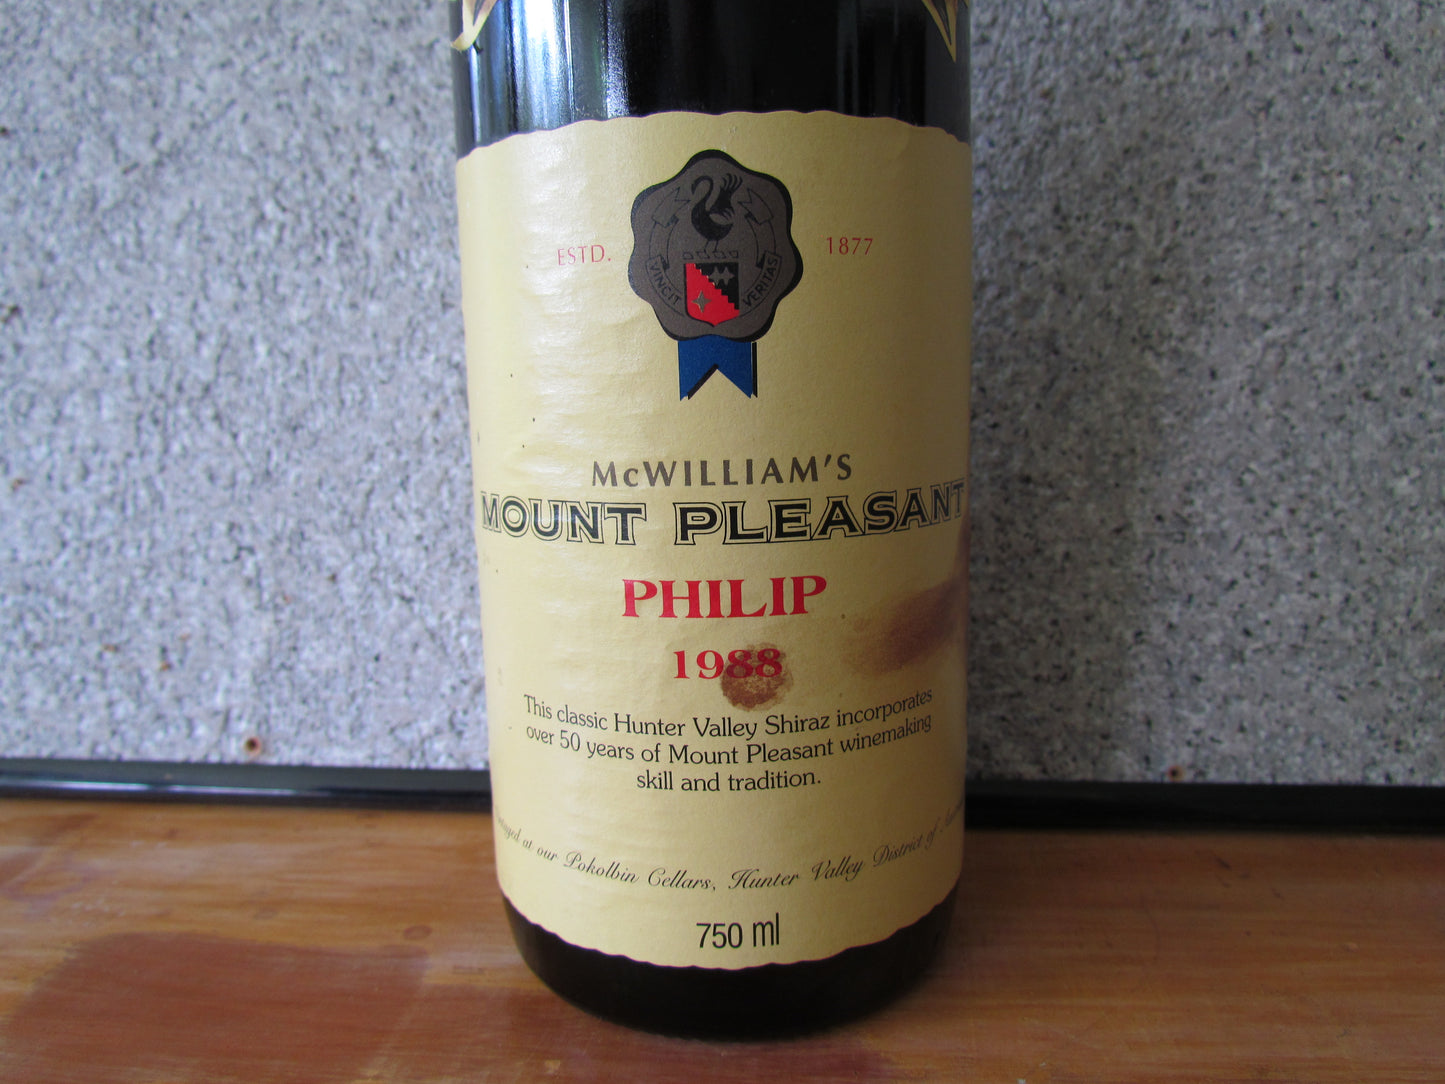 1988 McWilliams Mount Pleasant Shiraz Philip 750 ml